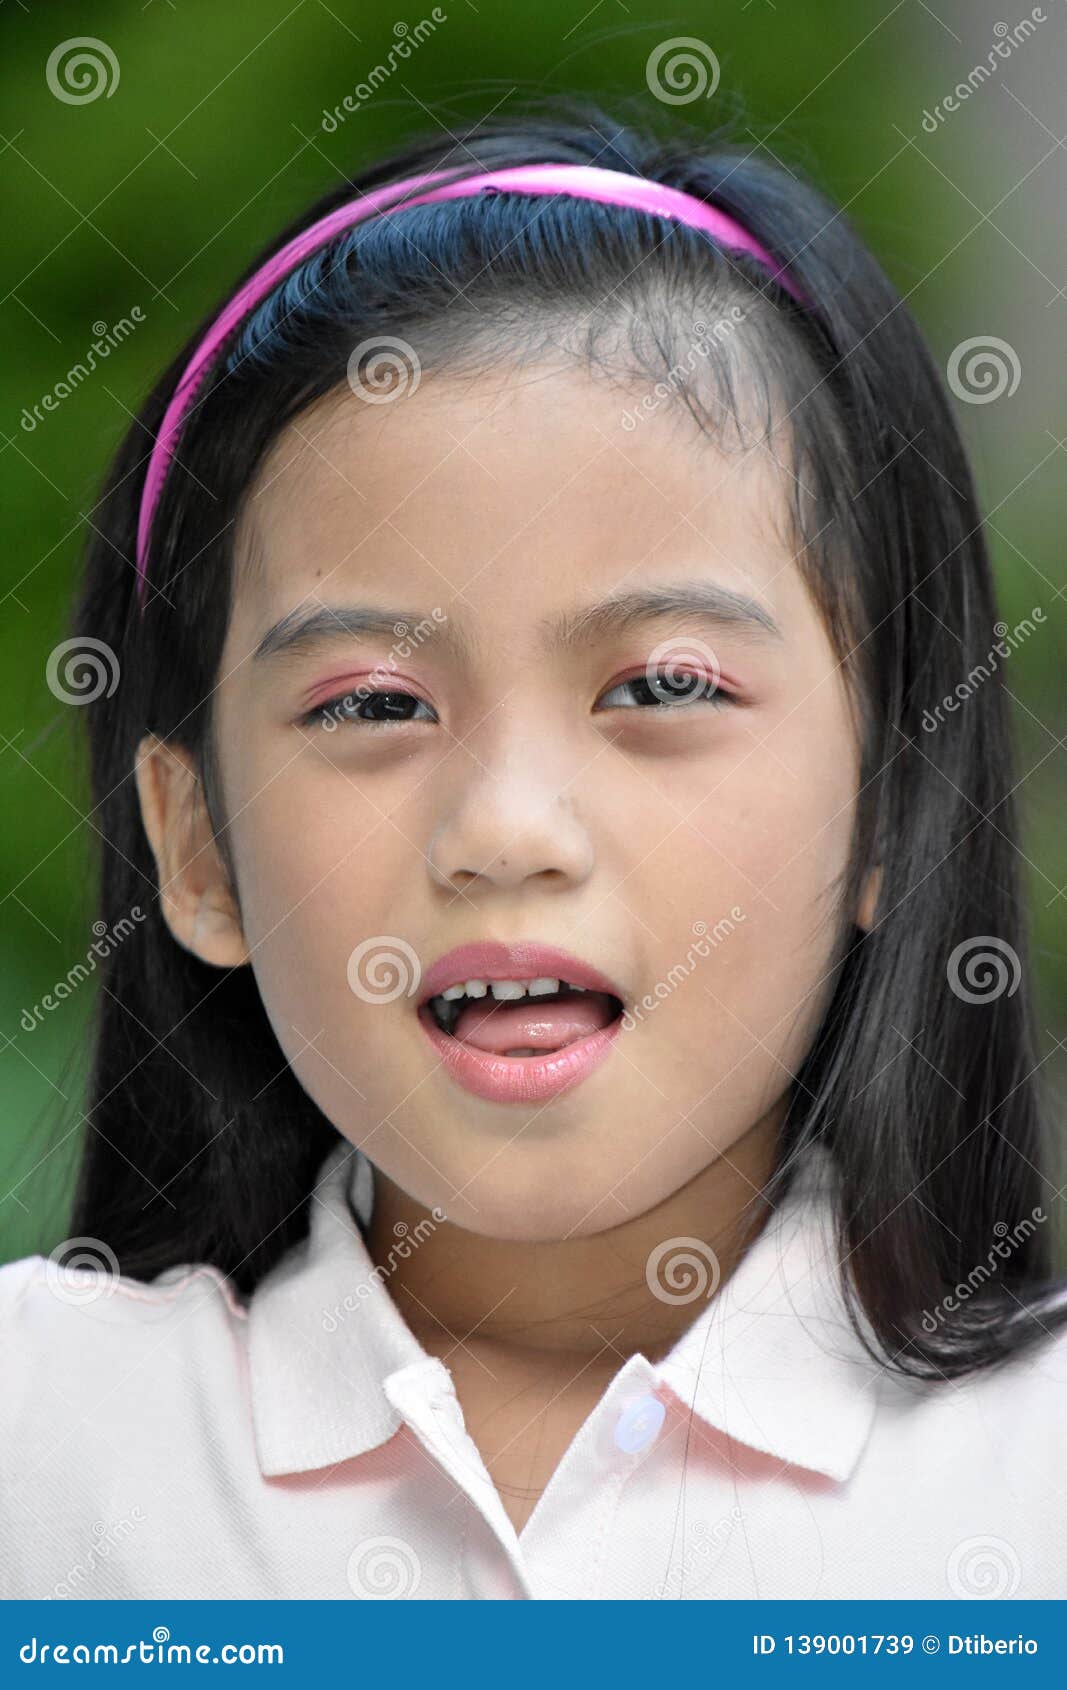 Filipina Girl Making Funny Faces Image Stock Image Du Jeune Minorité